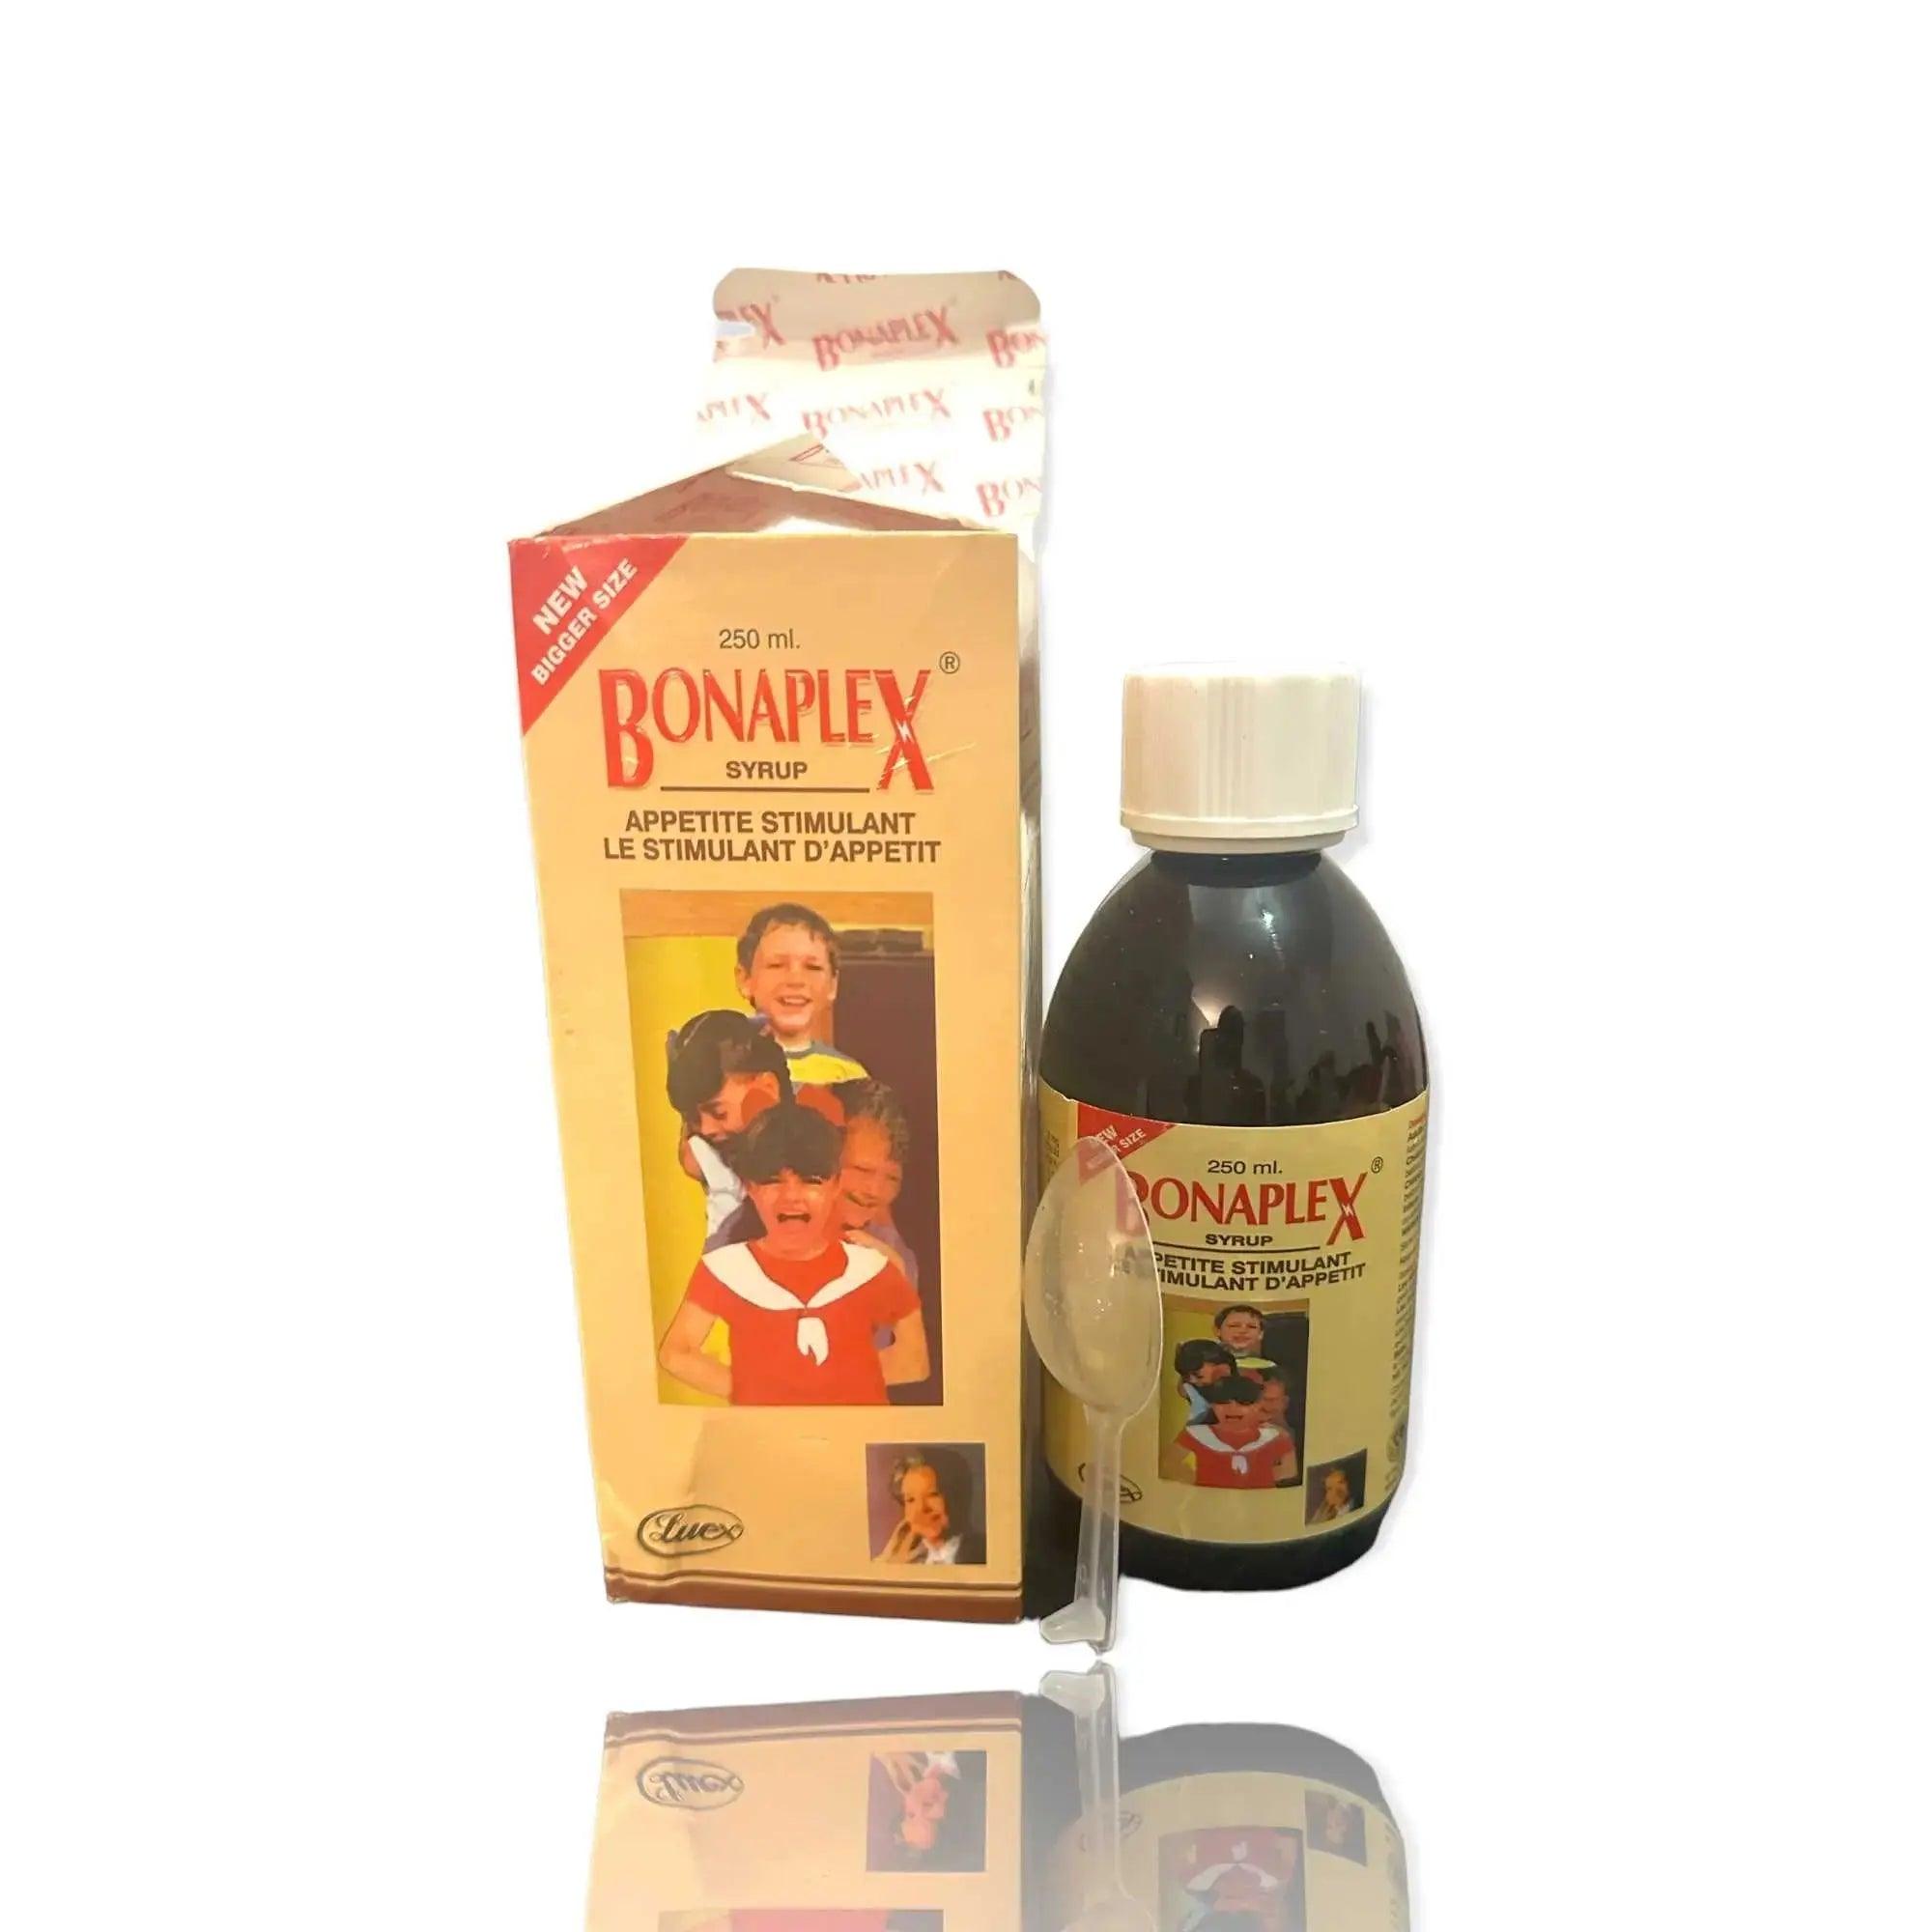 Bonaplex Syrup Appetite Stimulant useful for Children - Honesty Sales U.K